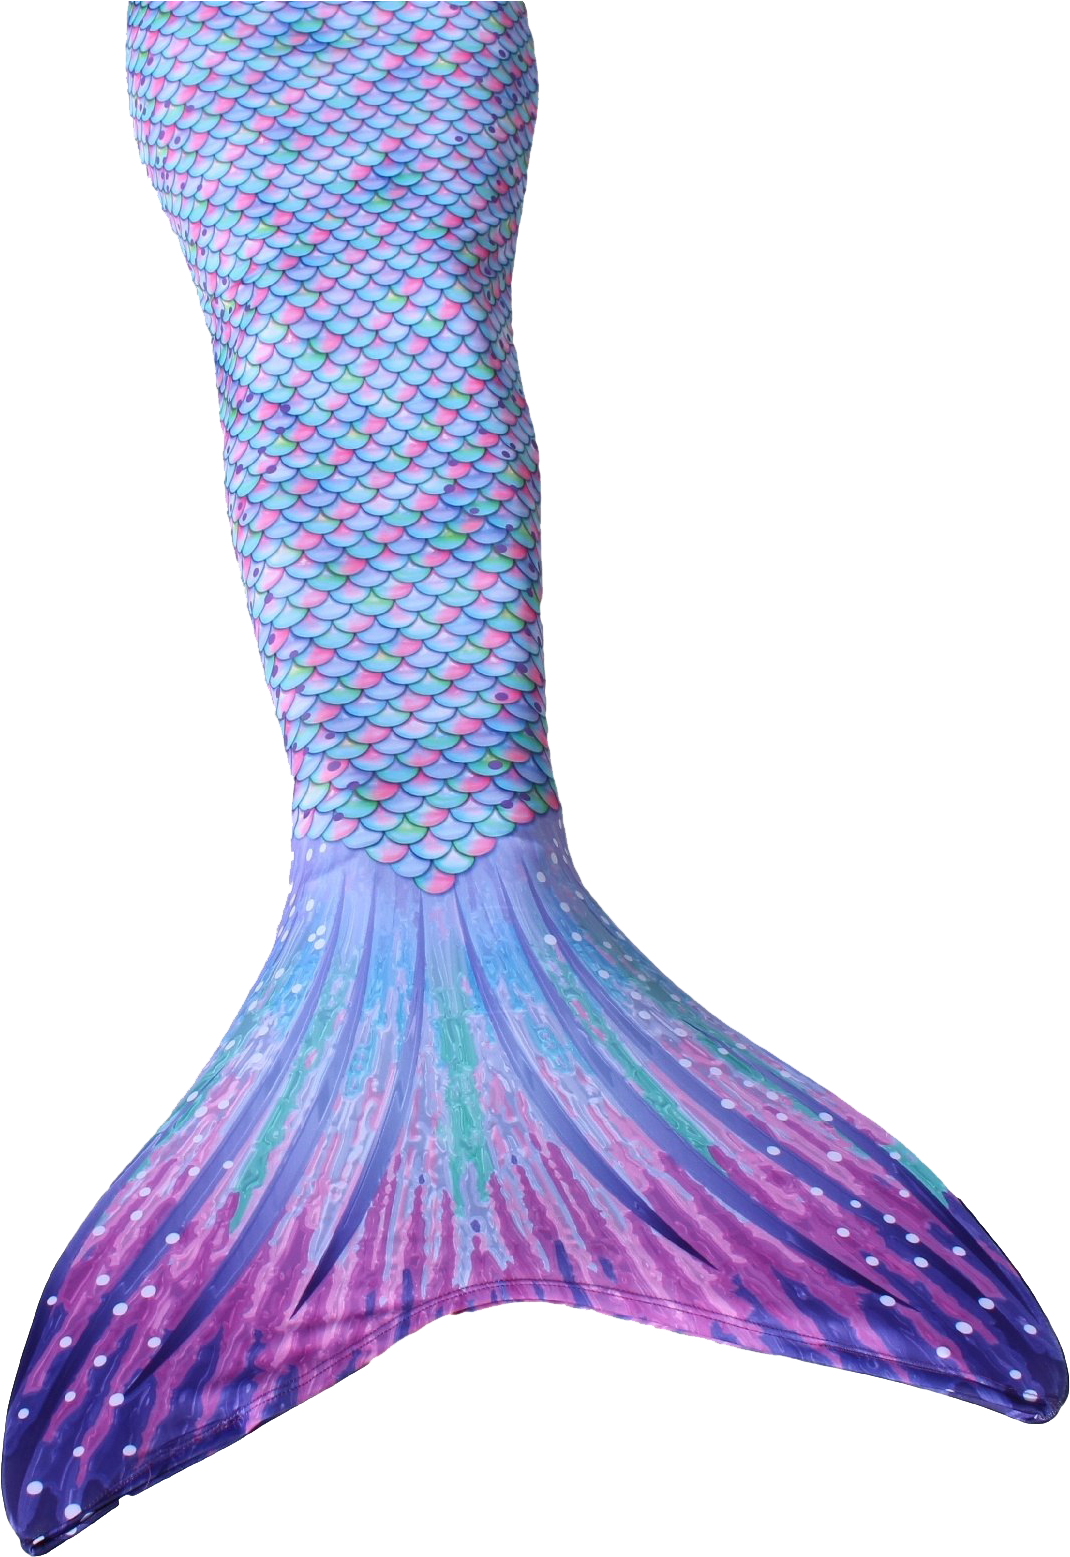 Colorful Mermaid Tail Costume Fabric